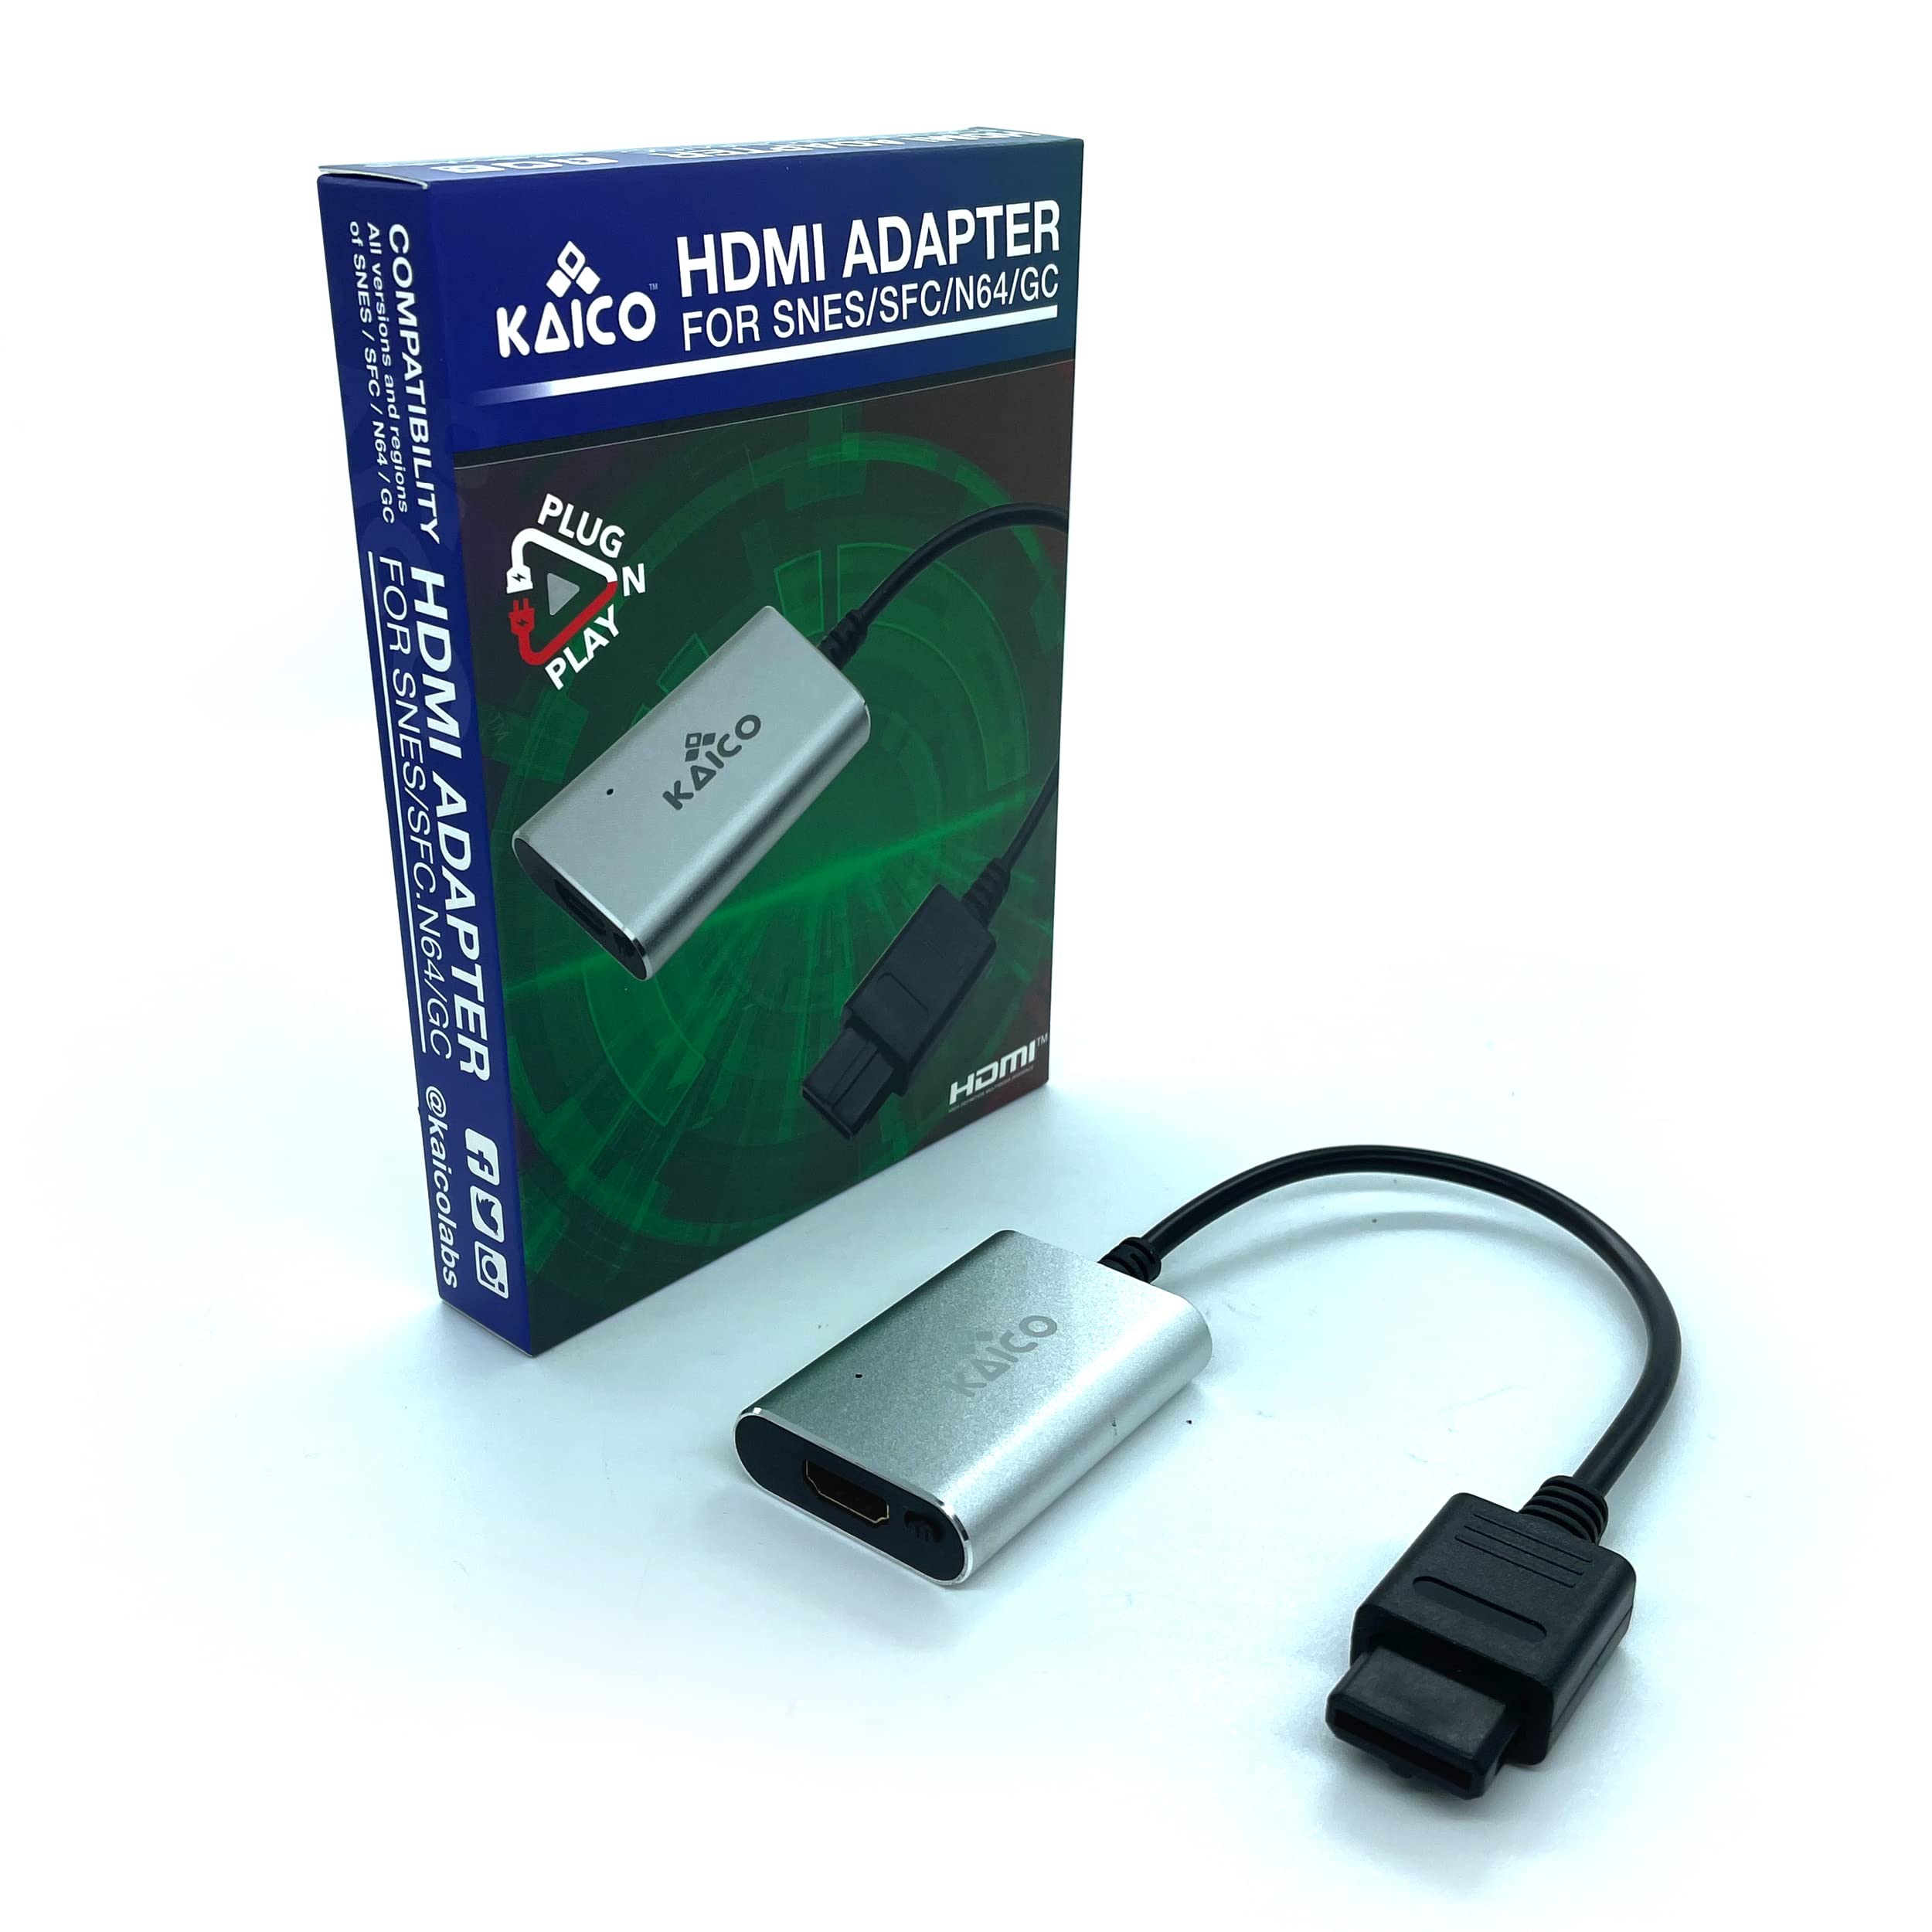 Kaico HDMI Adapter